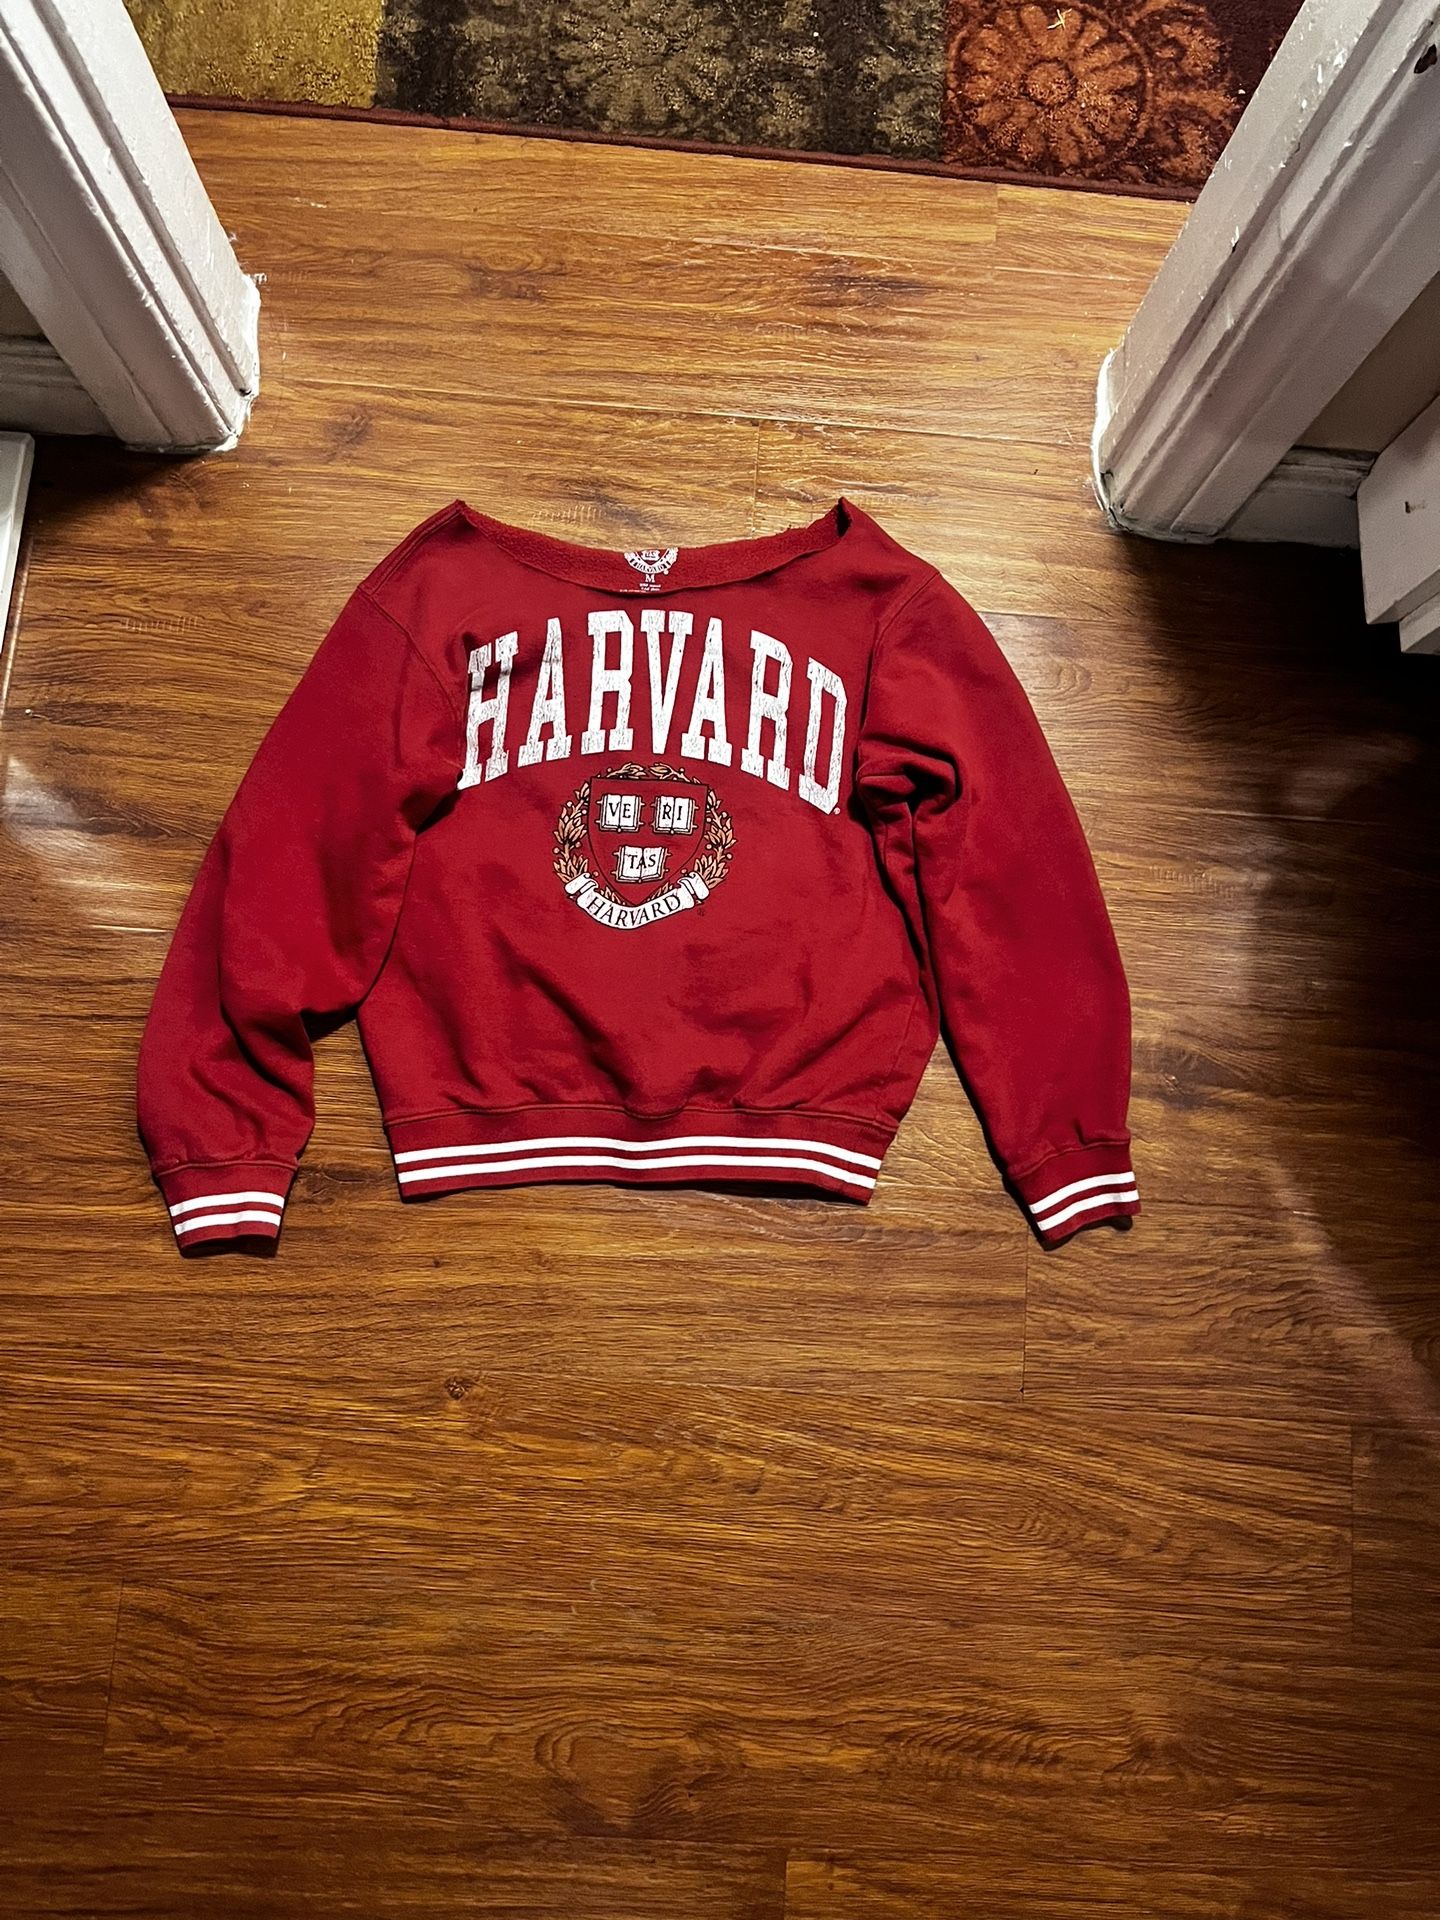 Harvard Cropped Shirt 